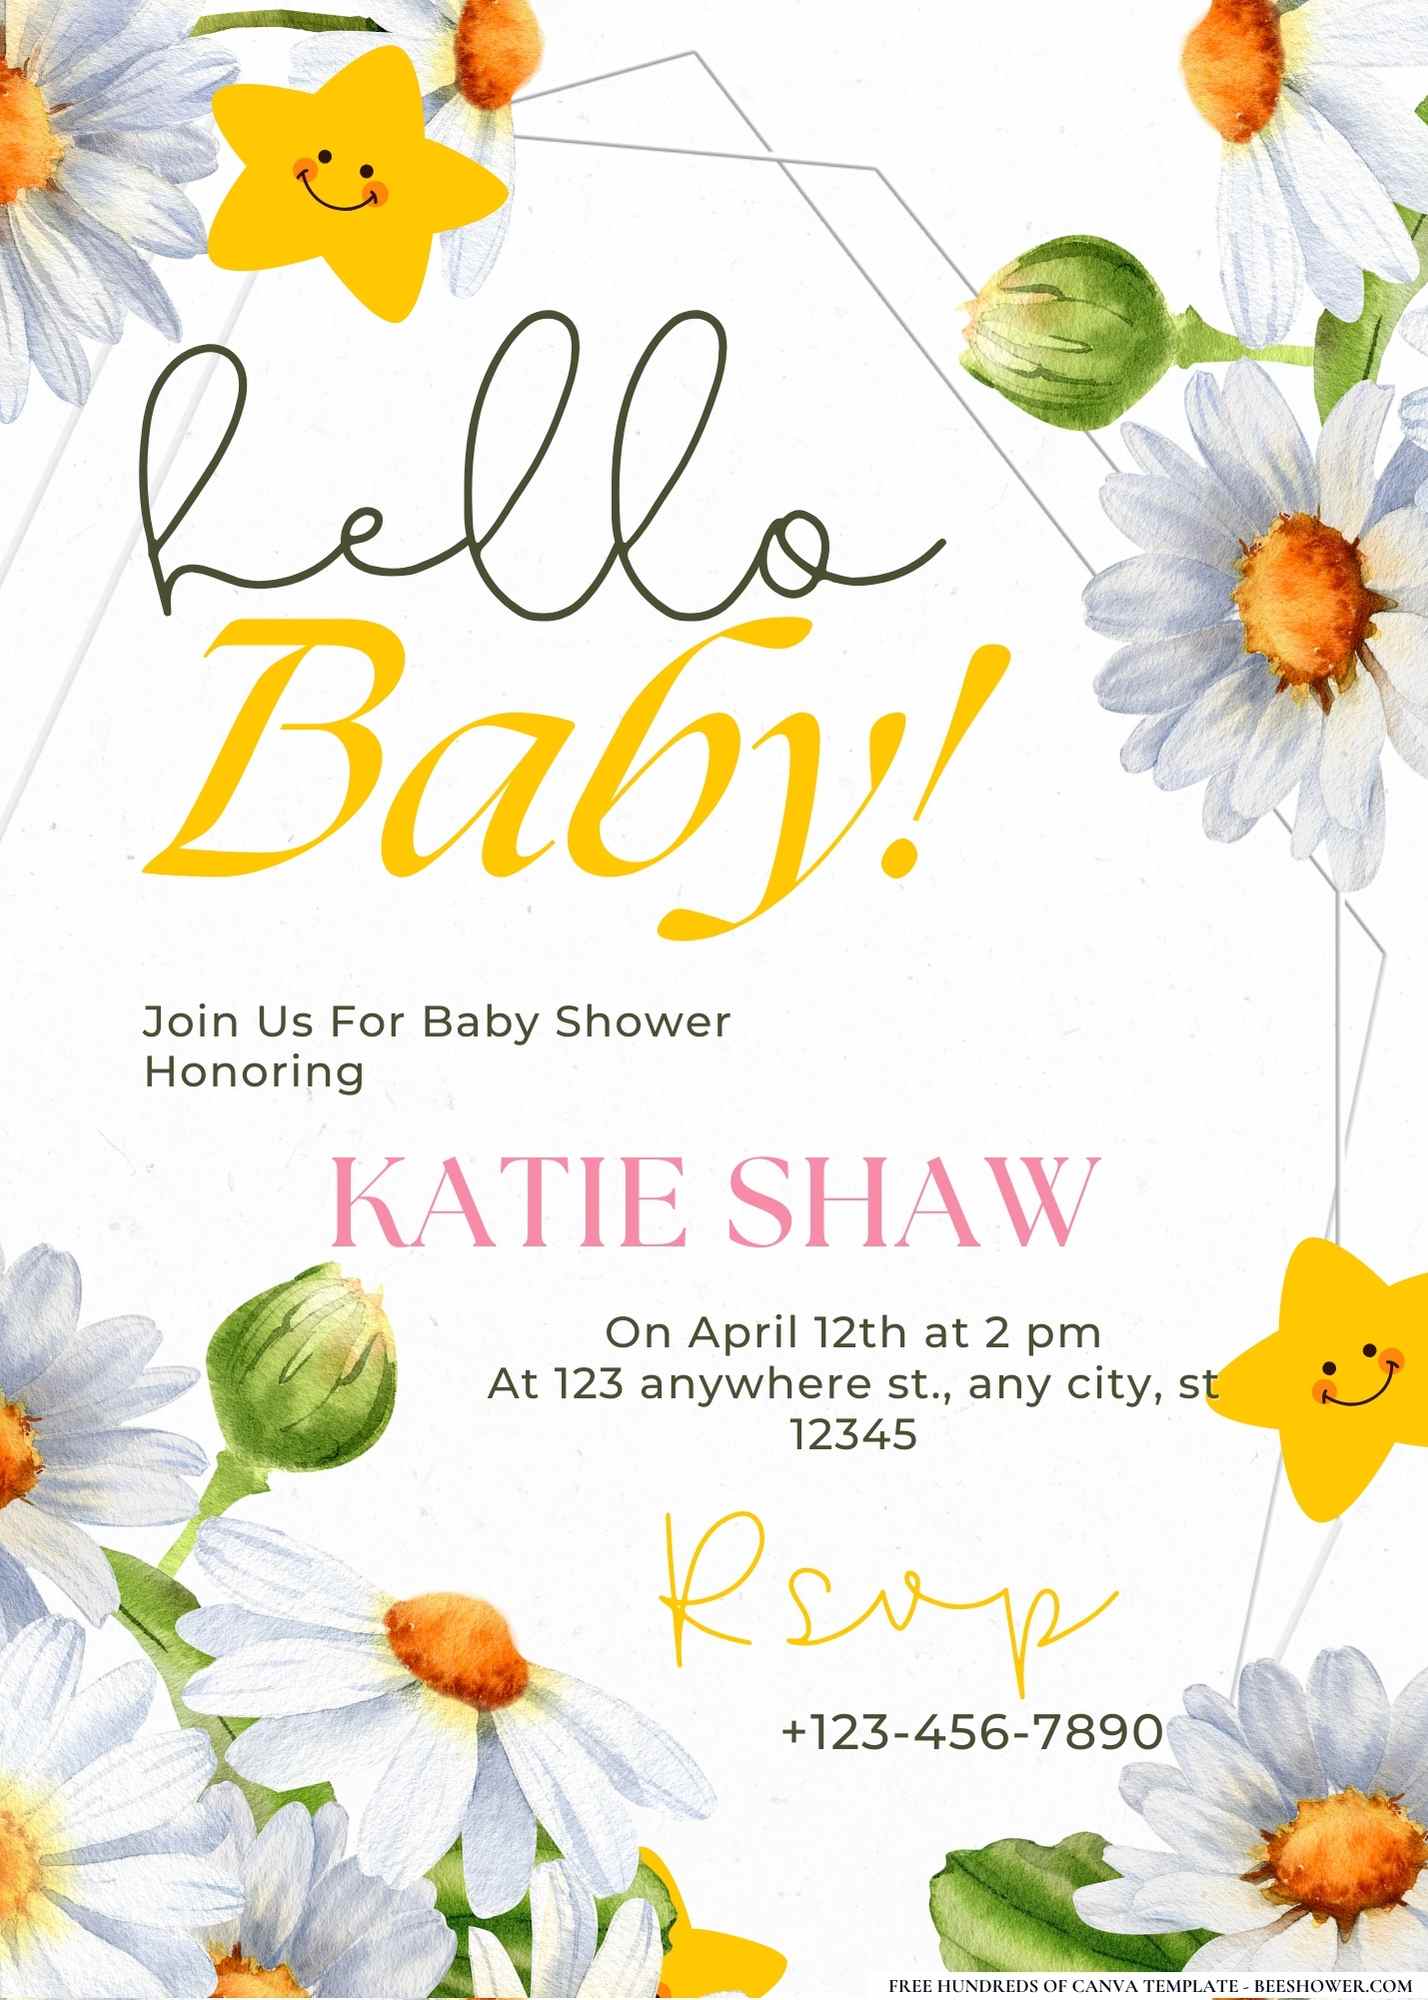 Daisy's Little Debut Baby Shower Invitation